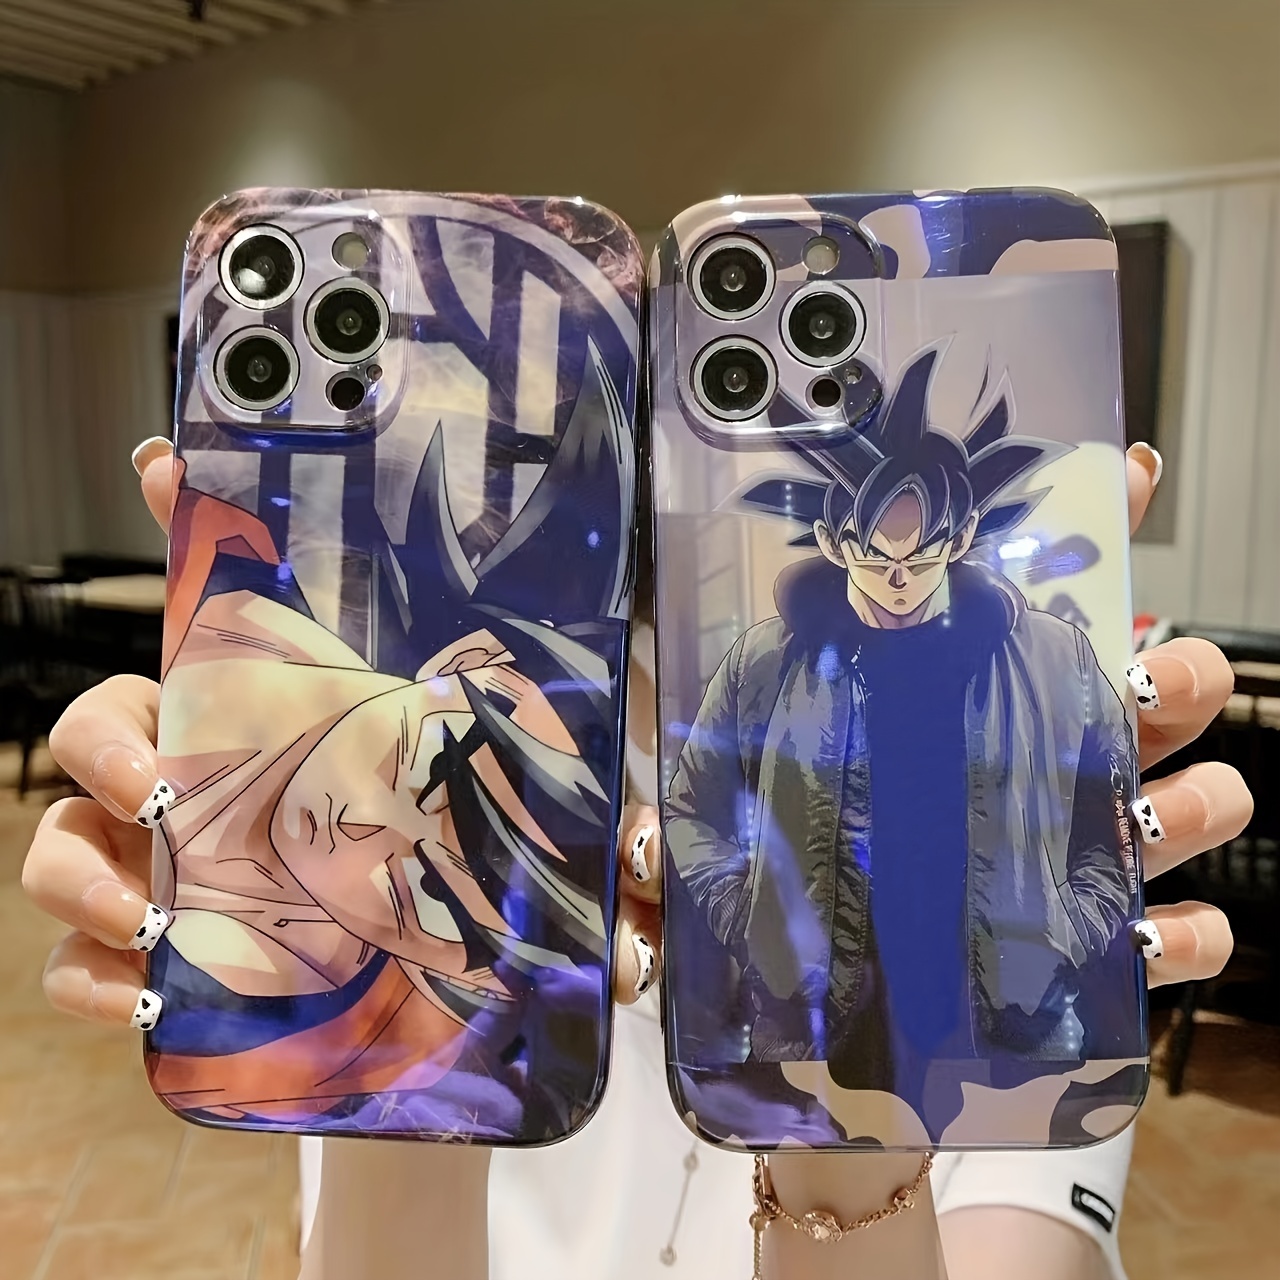 Skinit Anime Dragon Ball Z Goku & Vegeta Galaxy S20 FE Clear Case